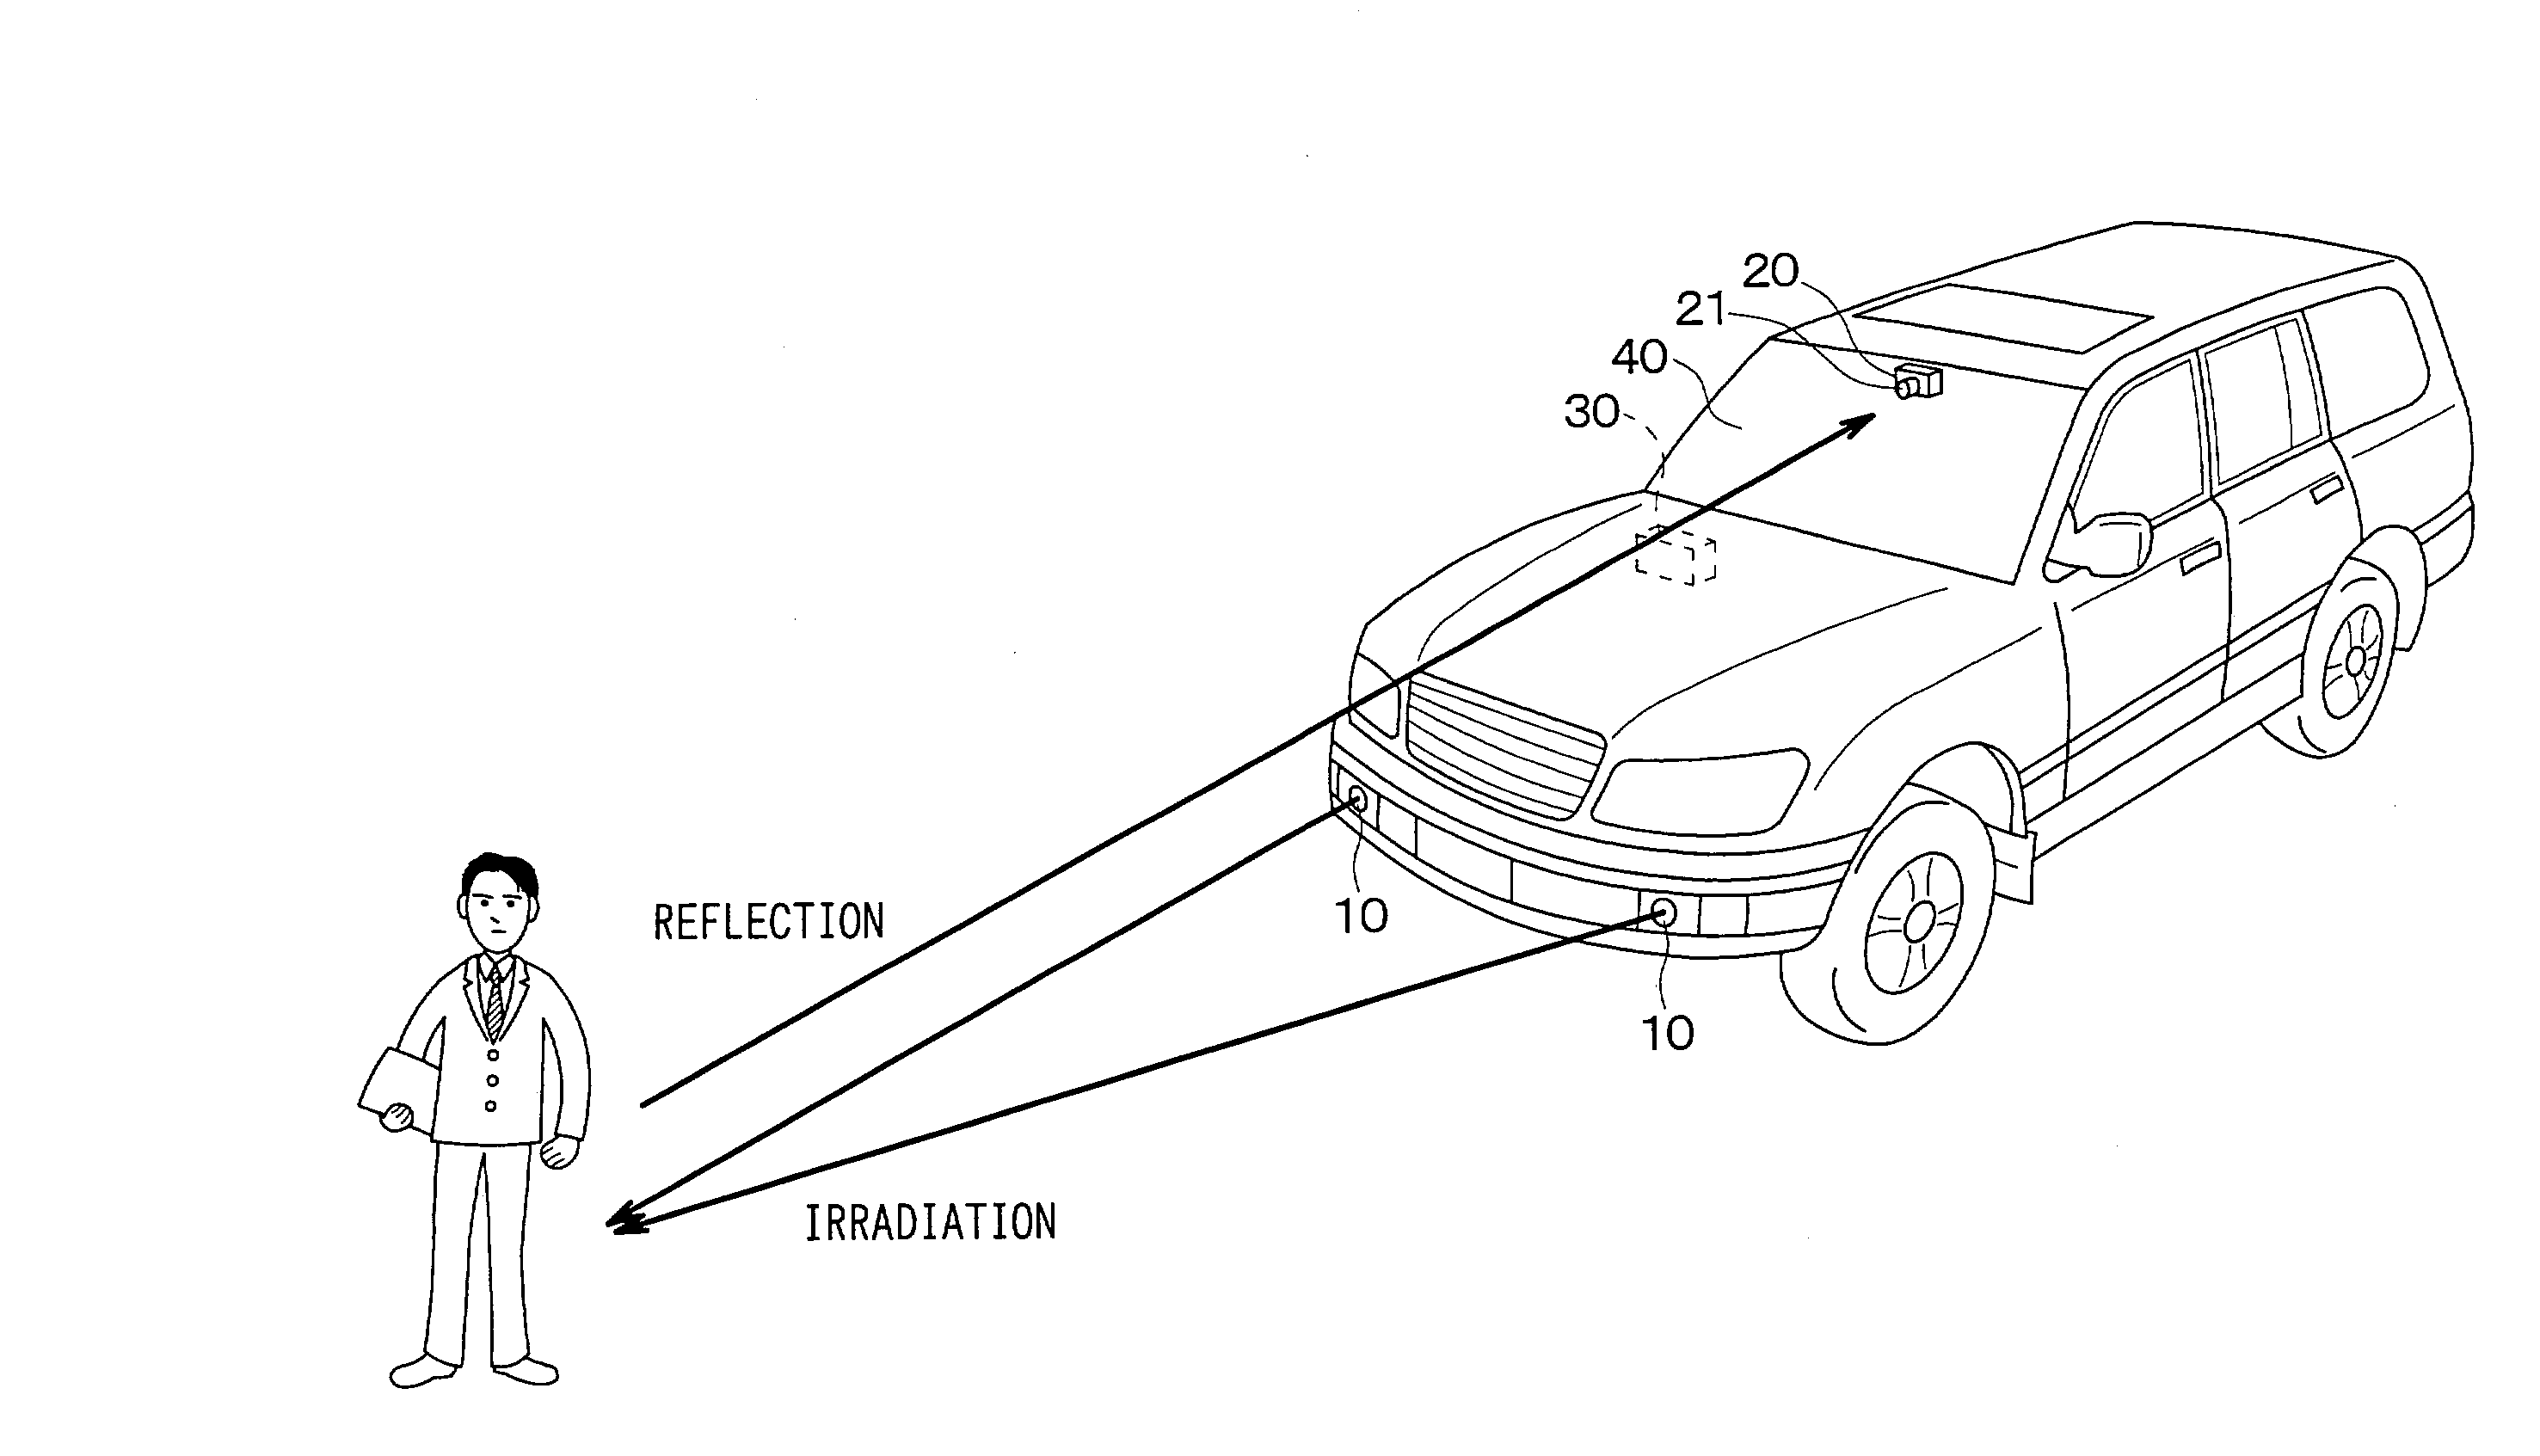 Vehicular forward-vision display system decreasing luminance with decreasing vehicle speed